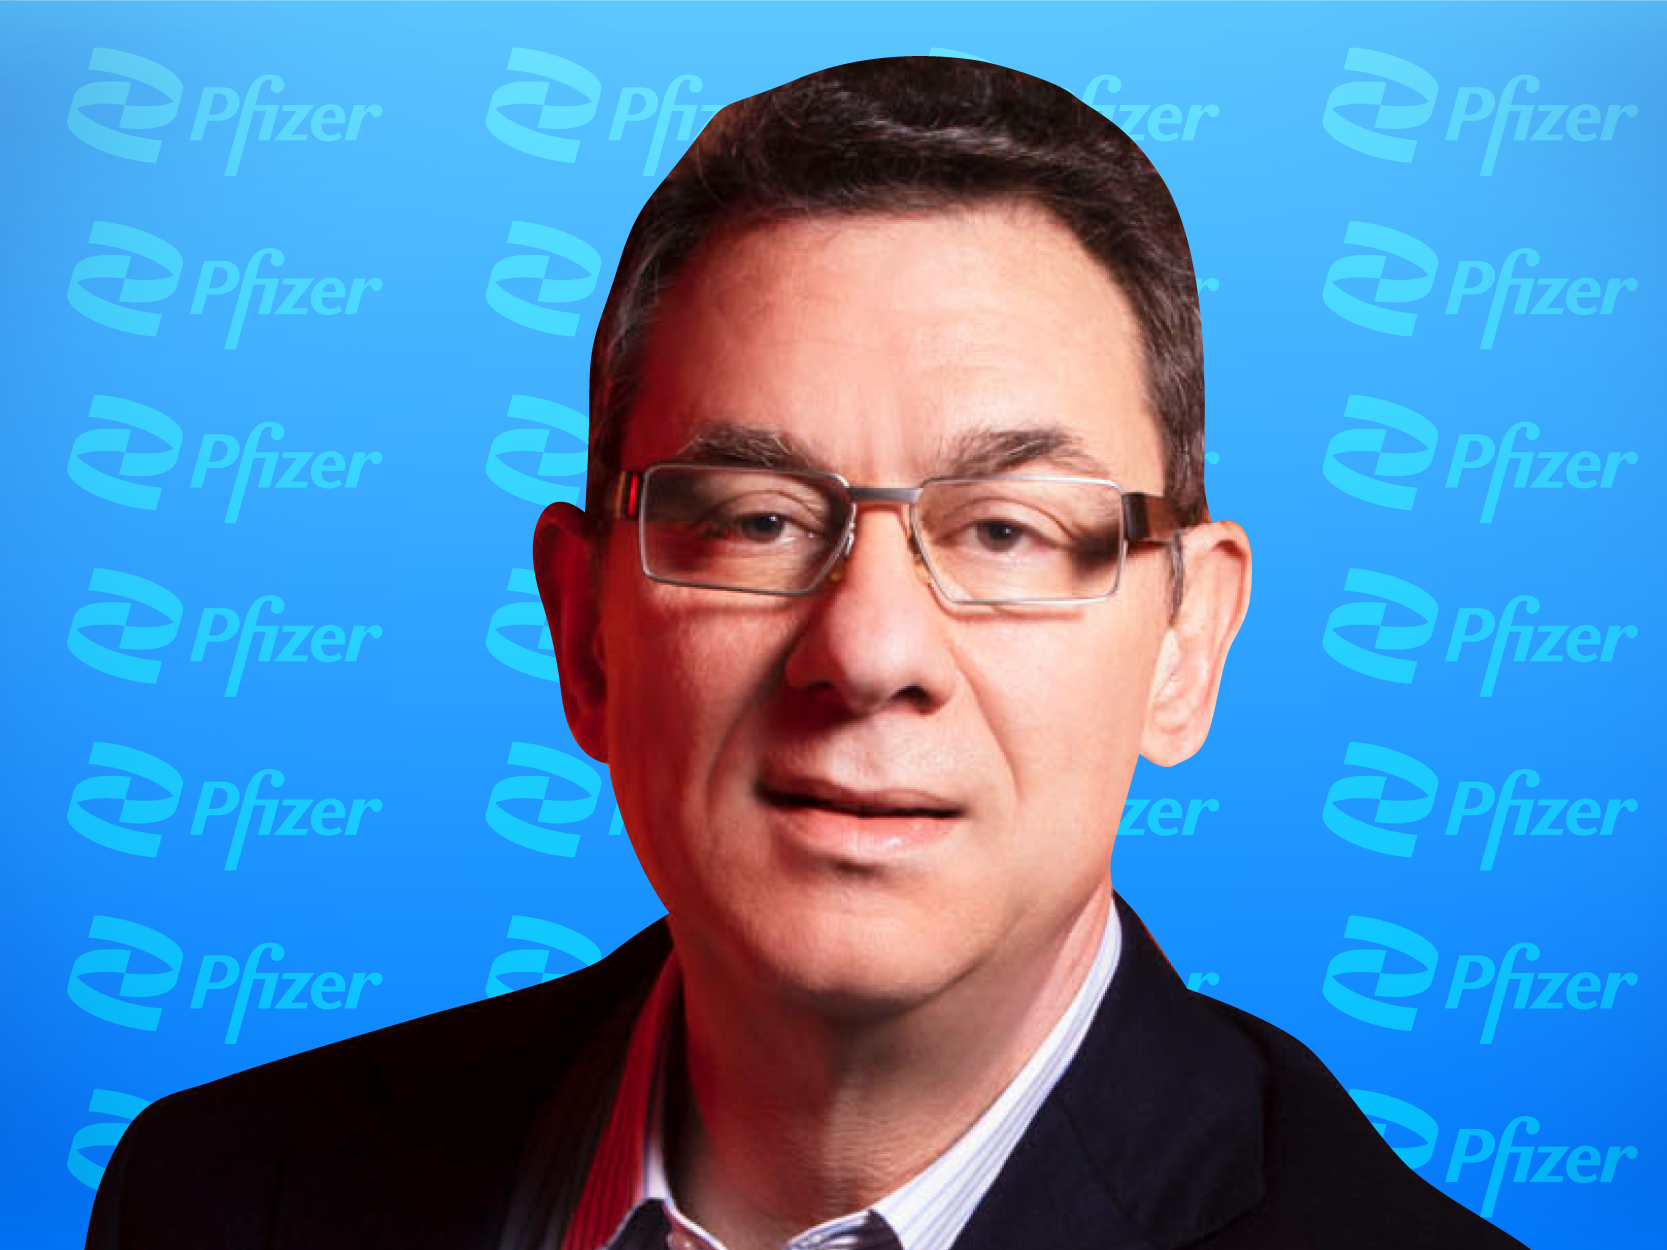 Albert Bourla, CEO of Pfizer